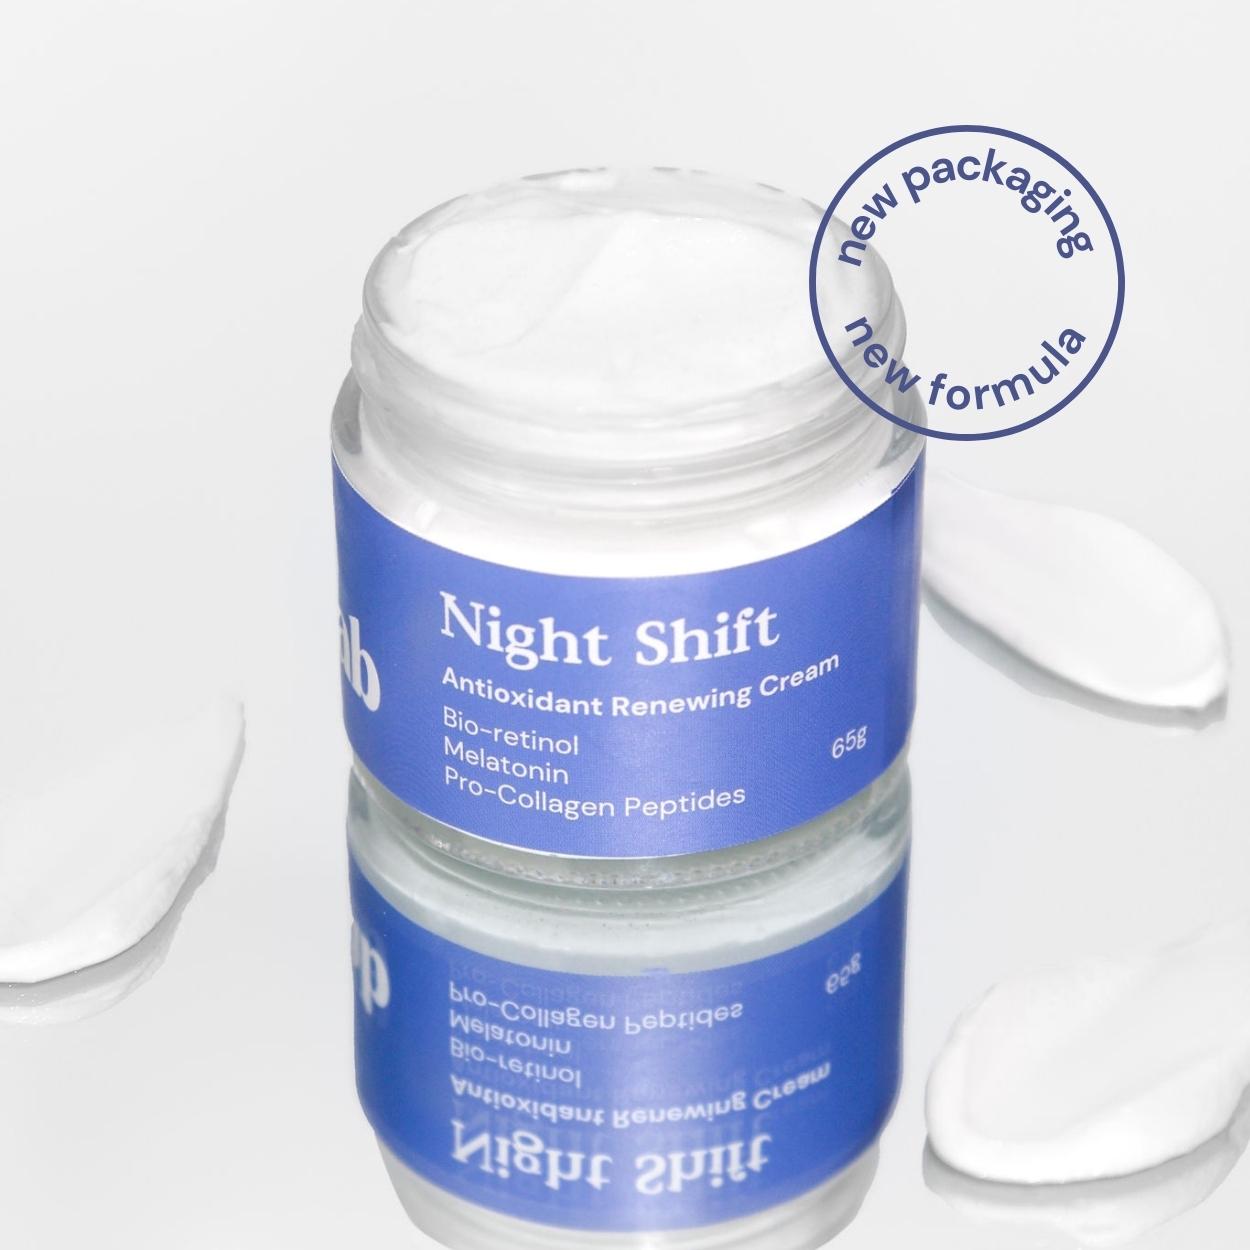 Night Shift Antioxidant Moisturiser